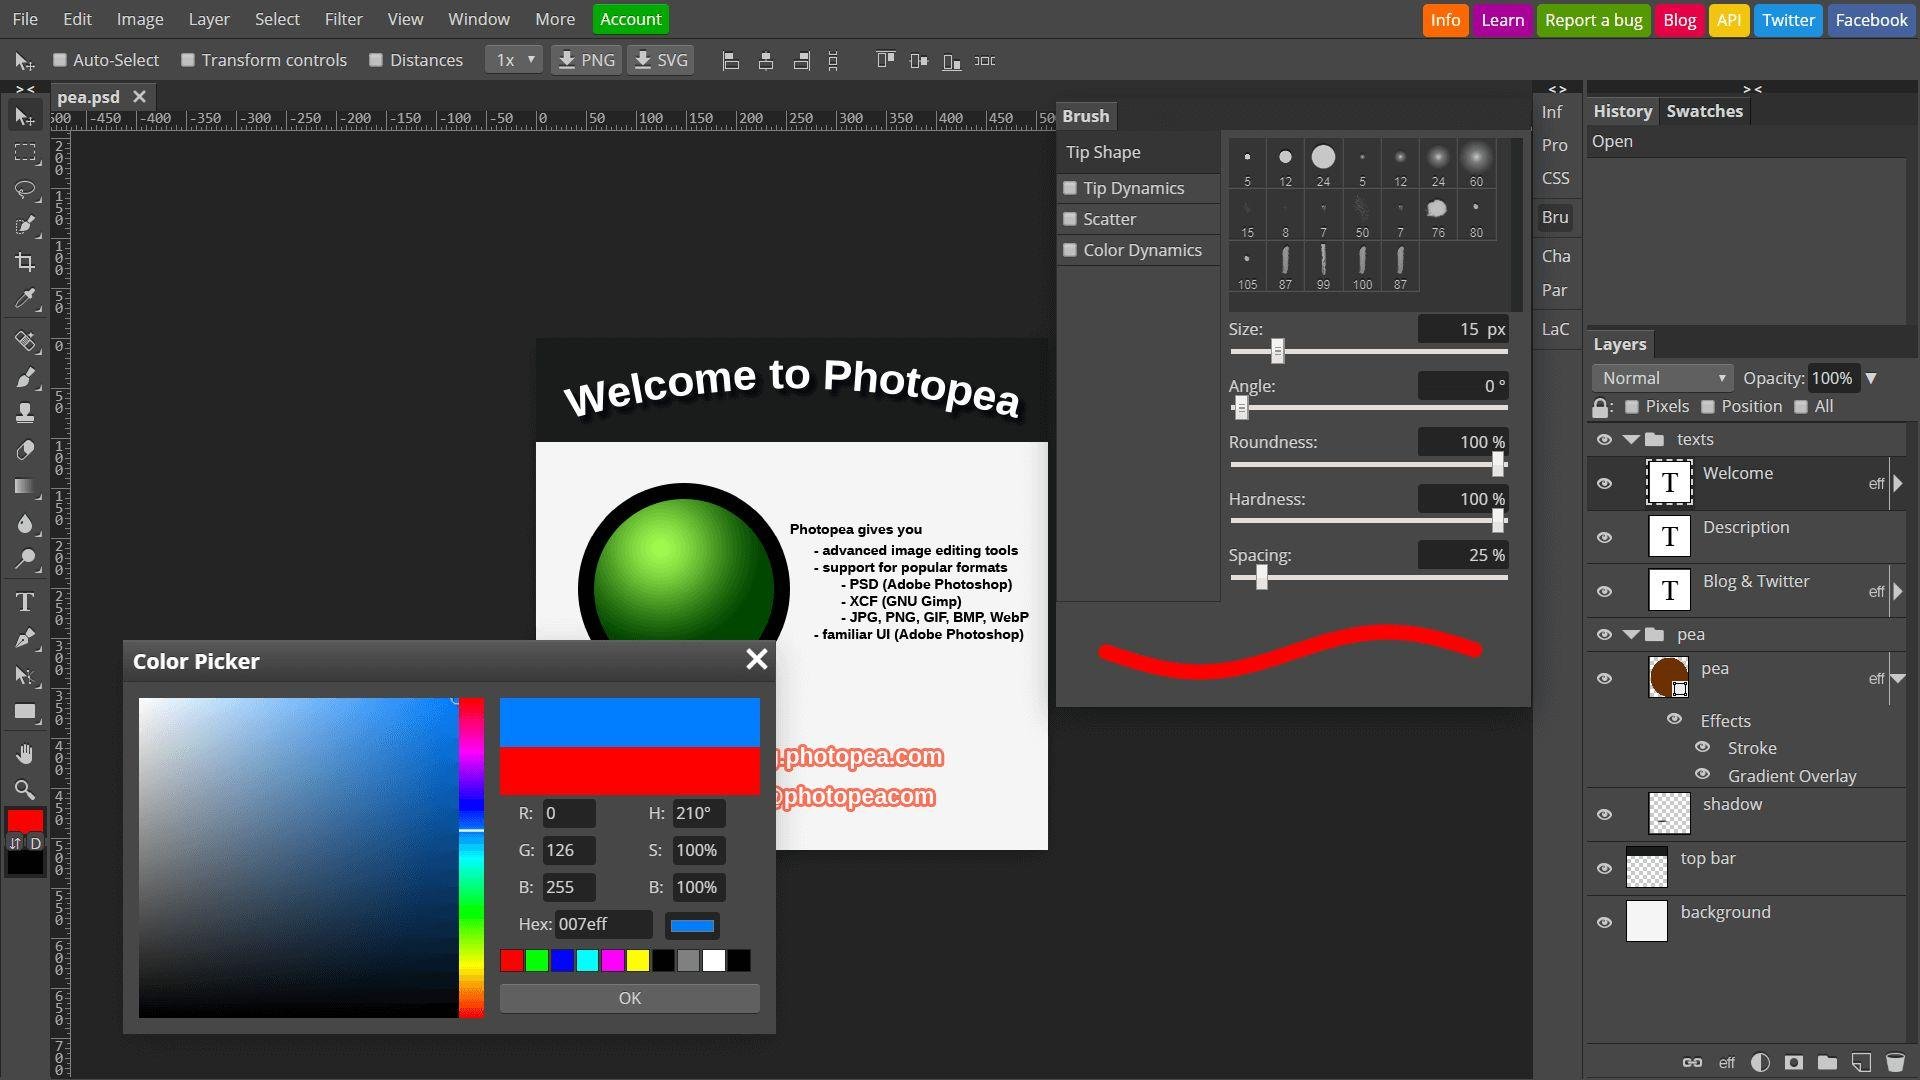 photopea interface screenshot